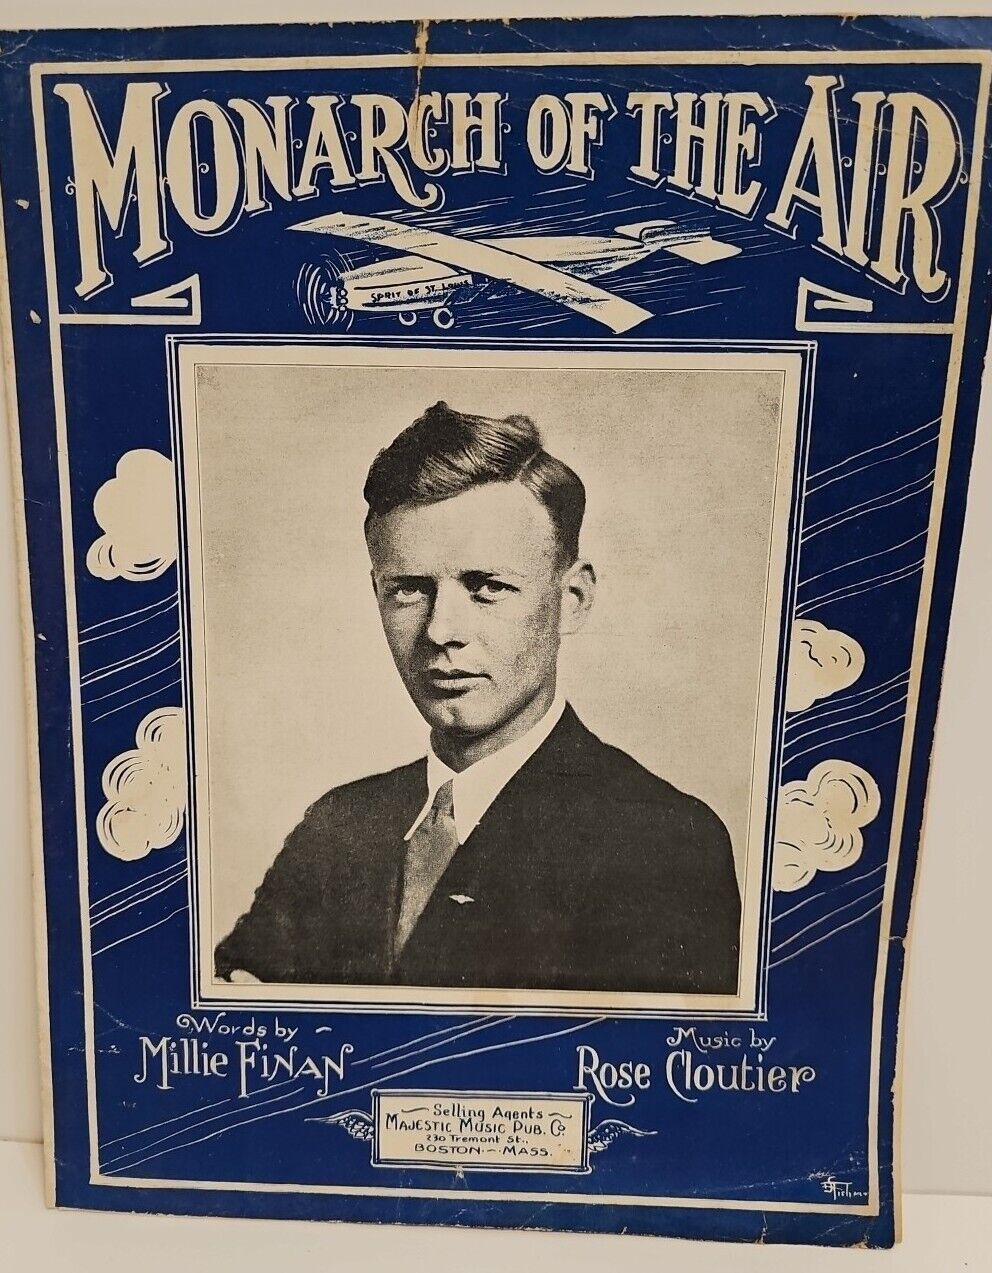 RARE 1927 SHEET MUSIC THE MONARCH OF THE AIR CHARLES LINDBERGH FINAN CLOUTIER